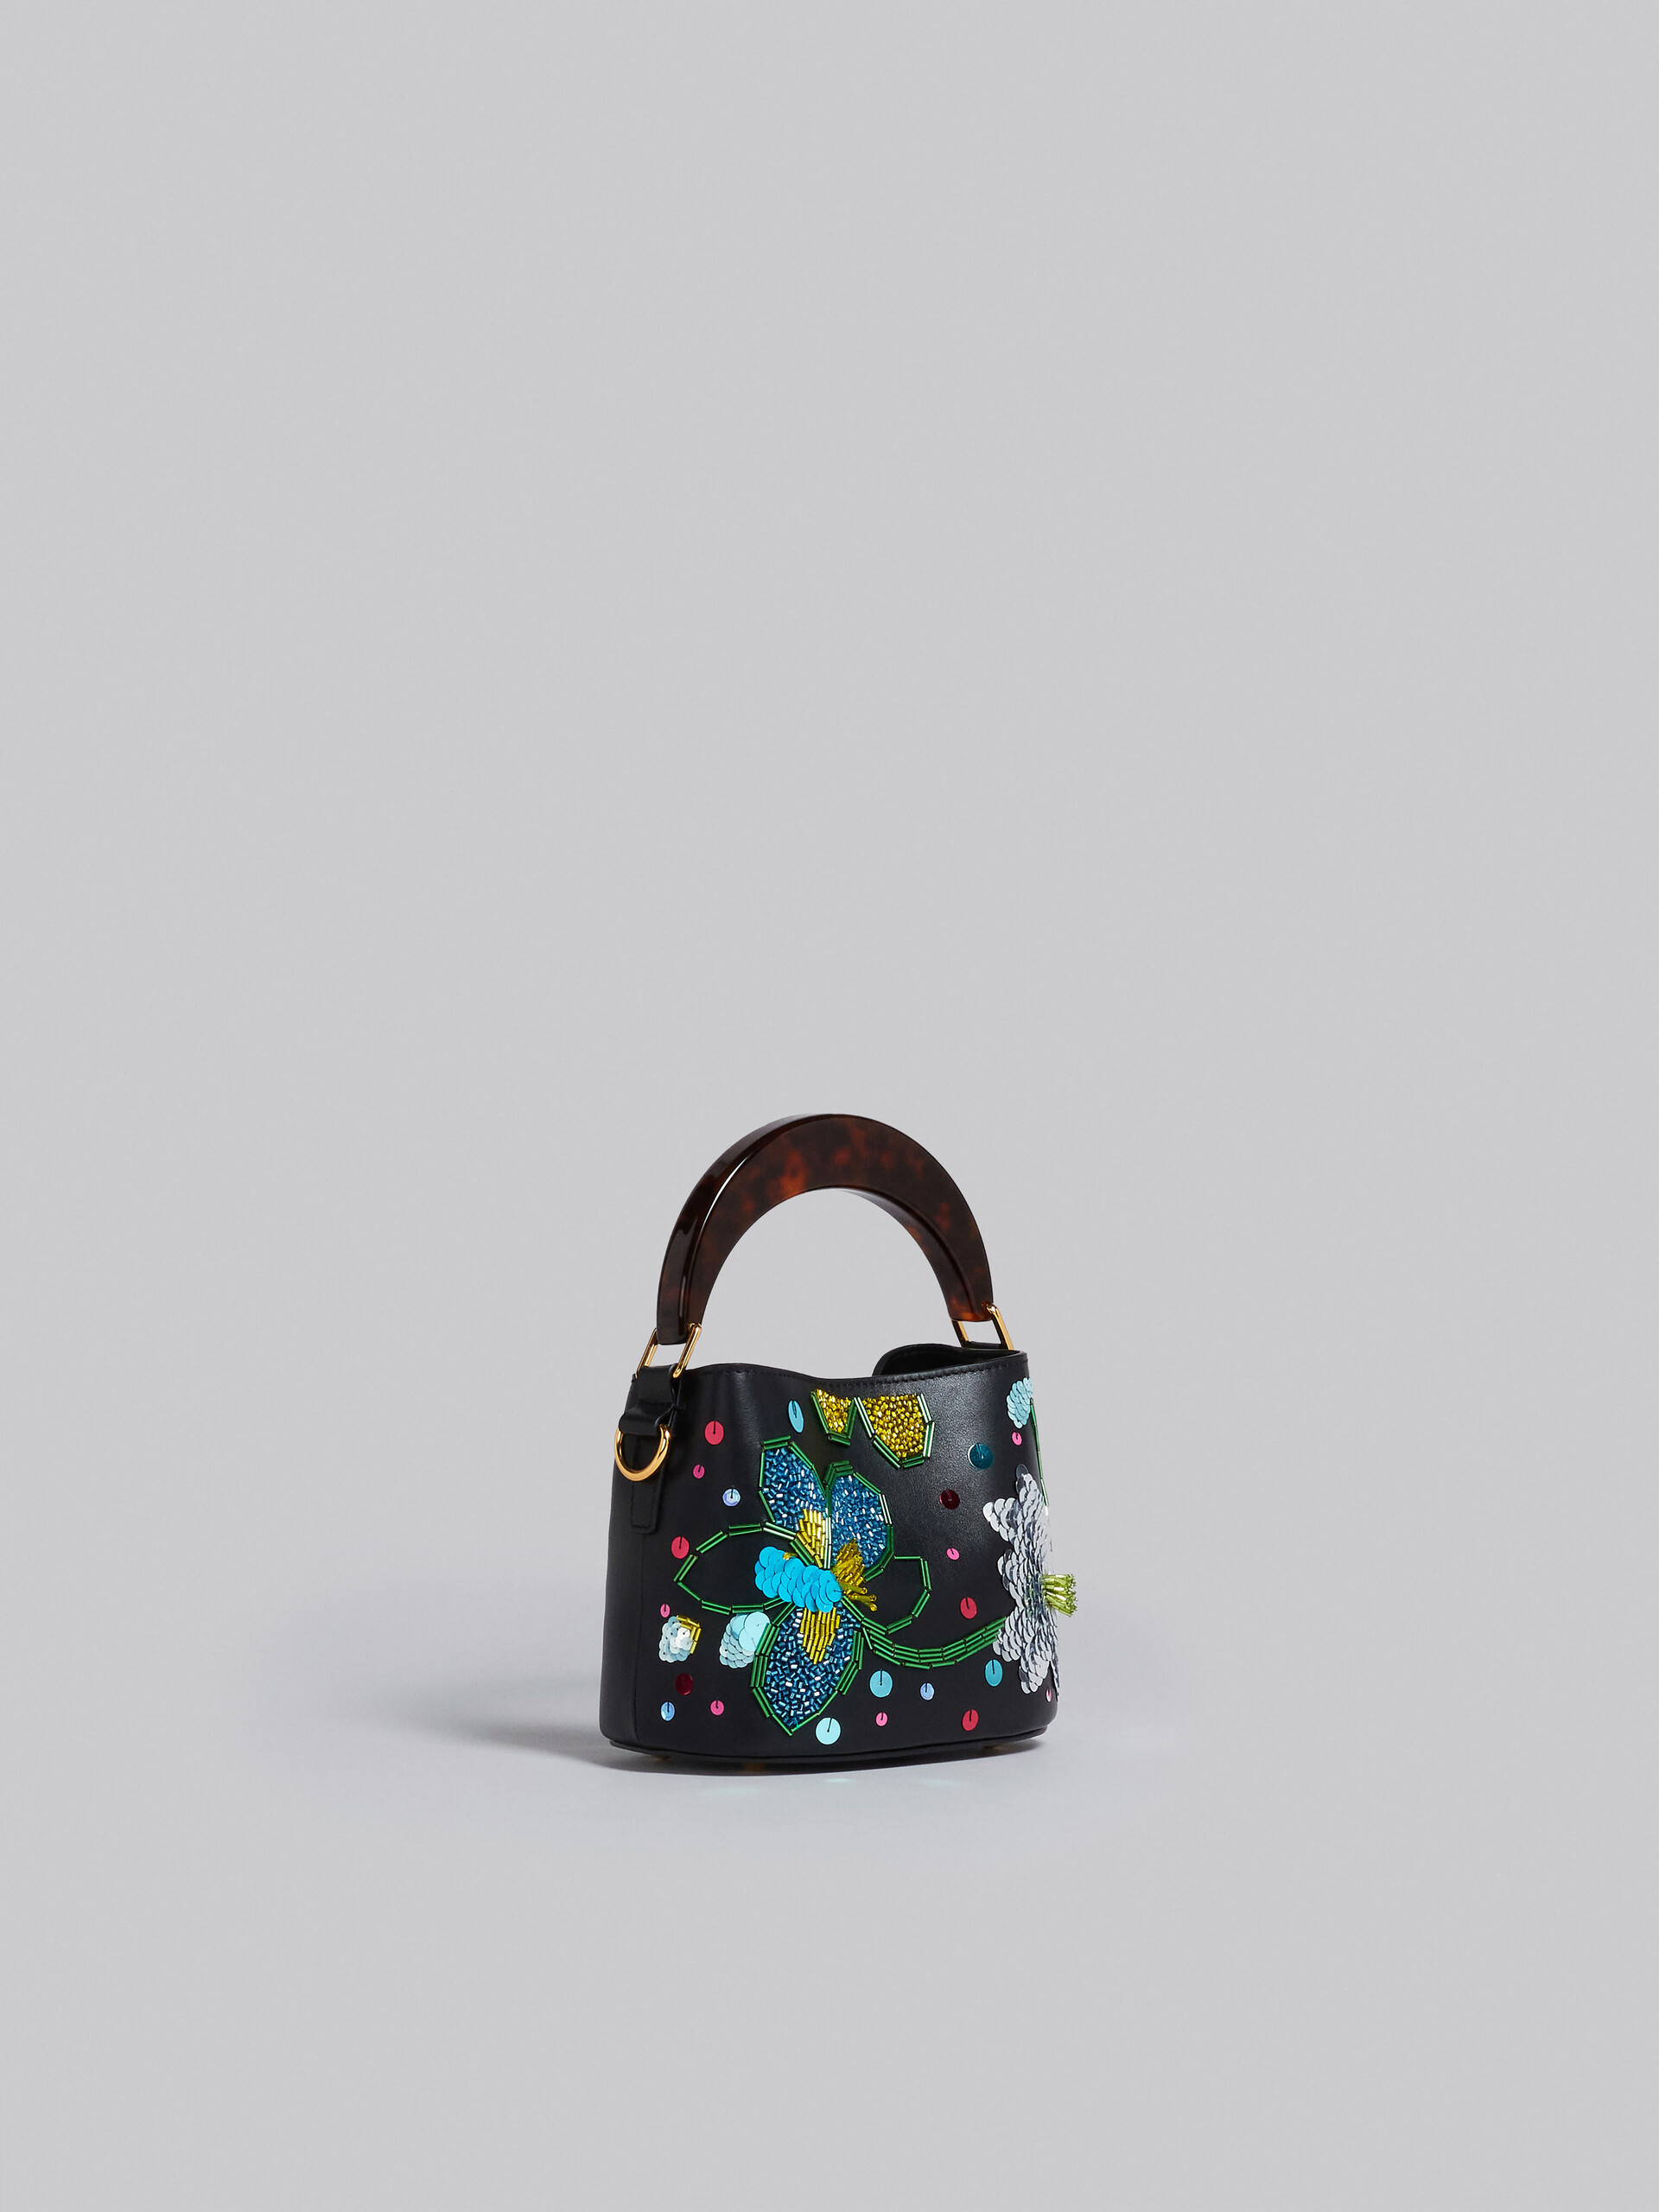 Venice Mini Bucket in embroidered black leather - Shoulder Bag - Image 5